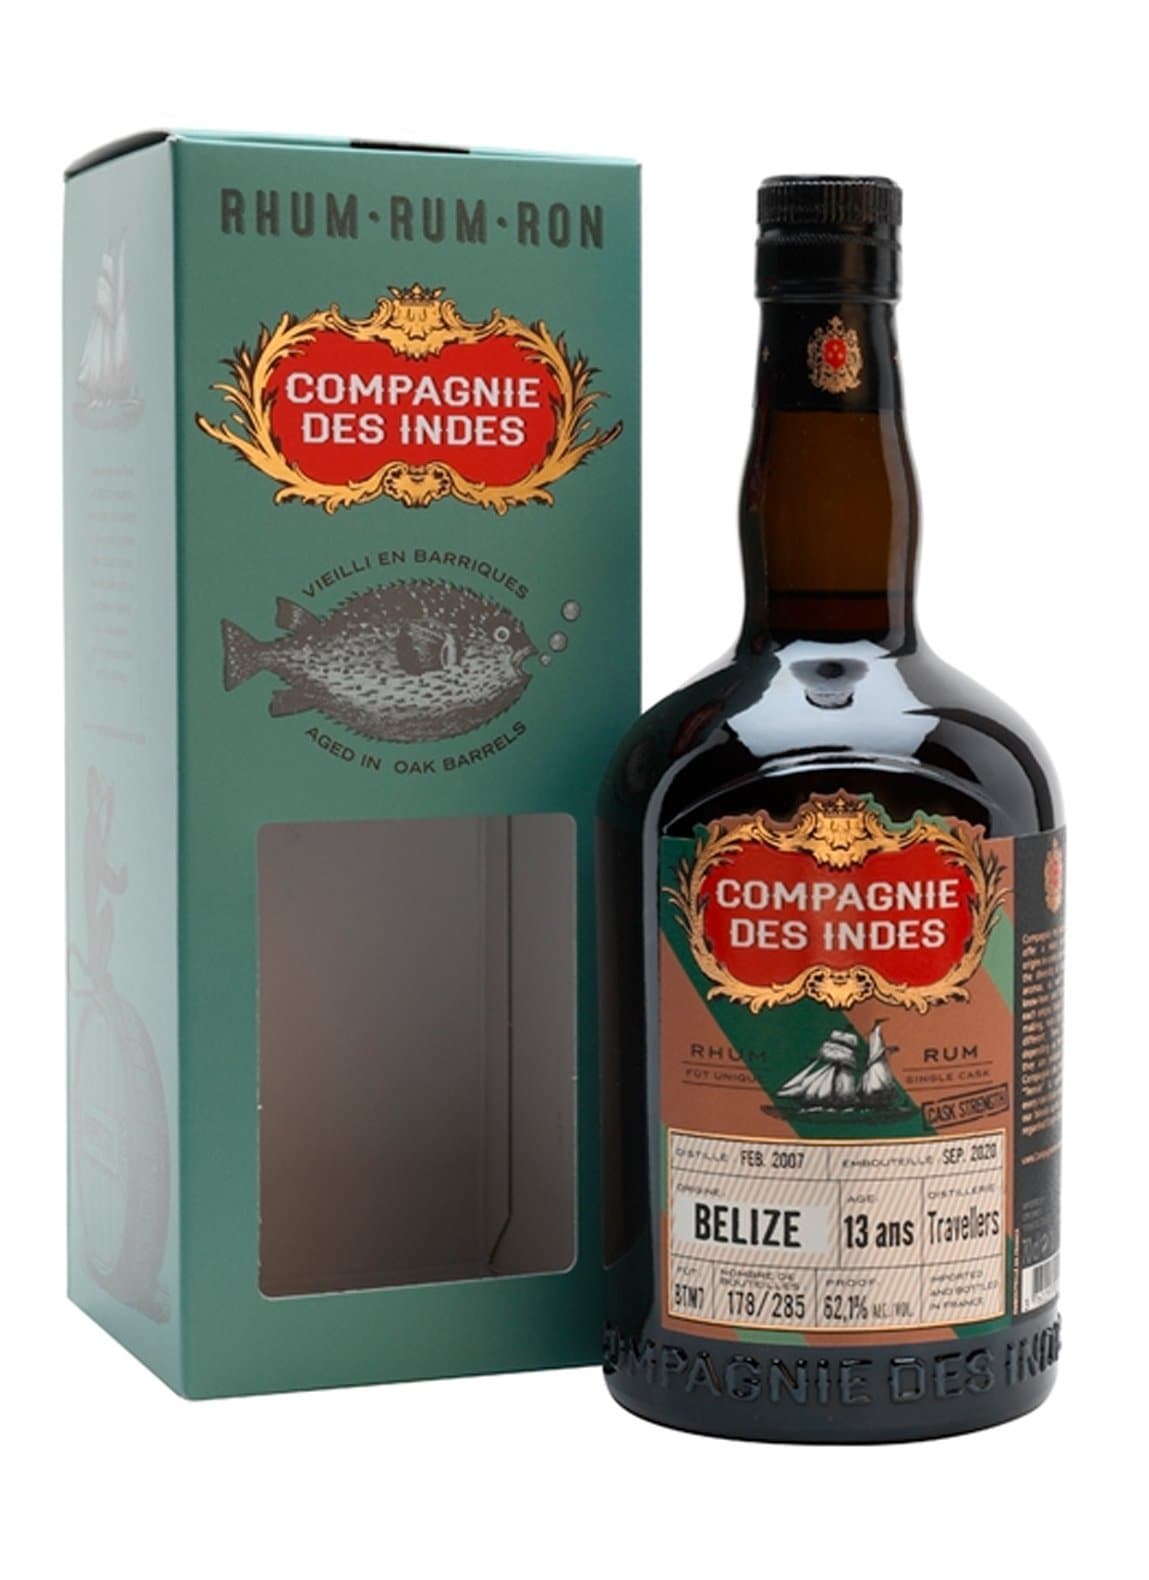 Compagnie des Indes Rum Belize 13 years 62.1% 700ML | Rum | Shop online at Spirits of France